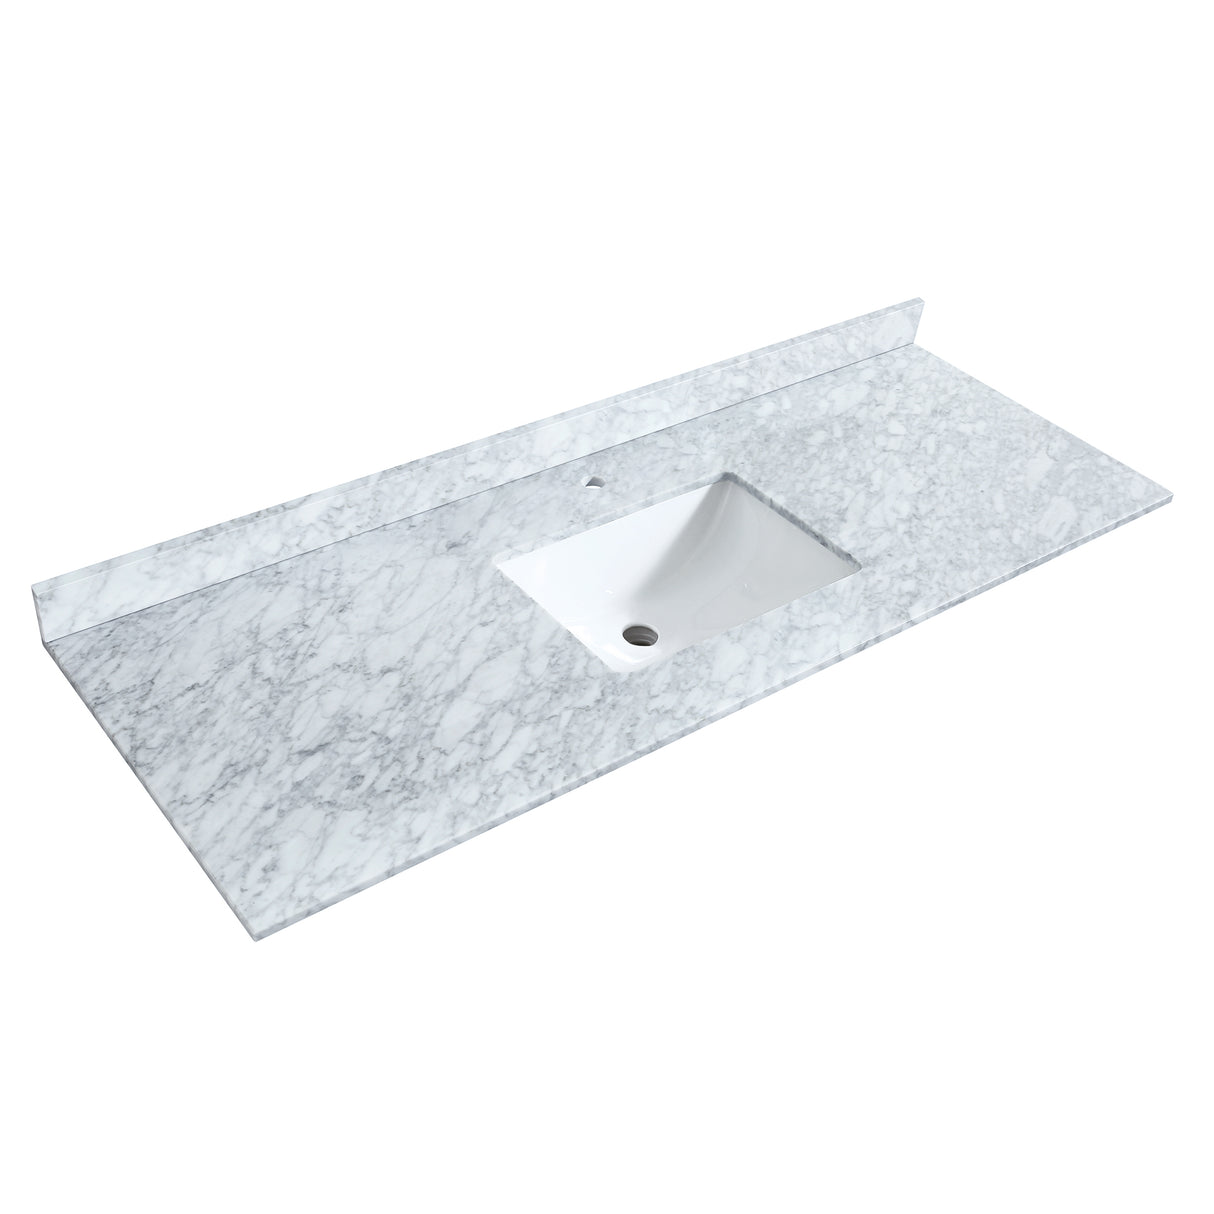 Daria 60 Inch Single Bathroom Vanity in White White Carrara Marble Countertop Undermount Square Sink Matte Black Trim 58 Inch Mirror